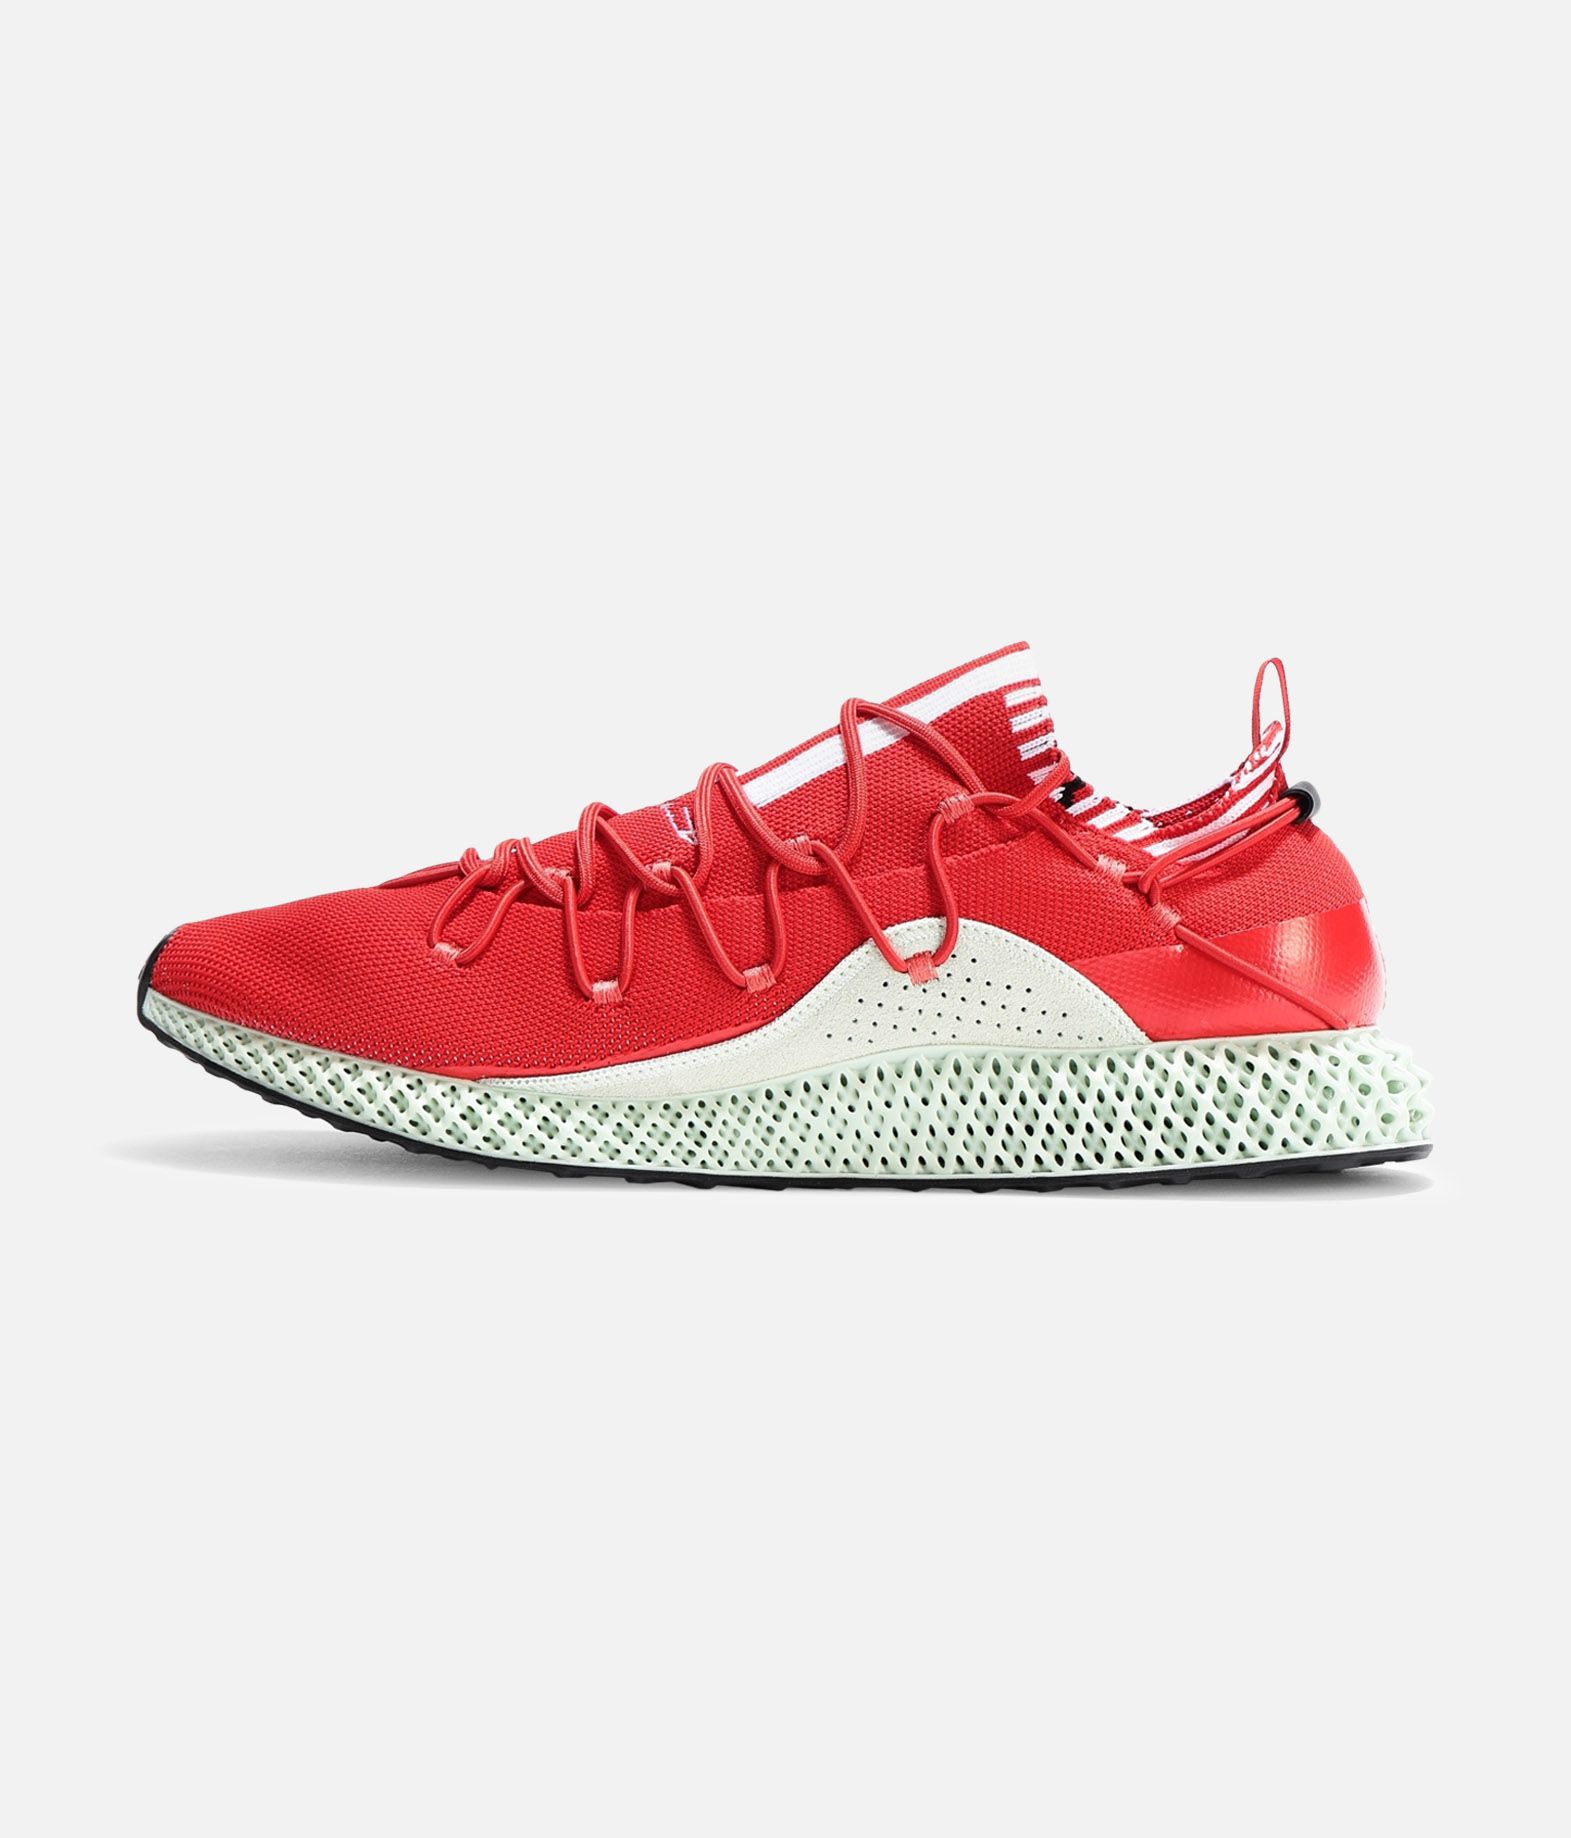 adidas futurecraft 4d red